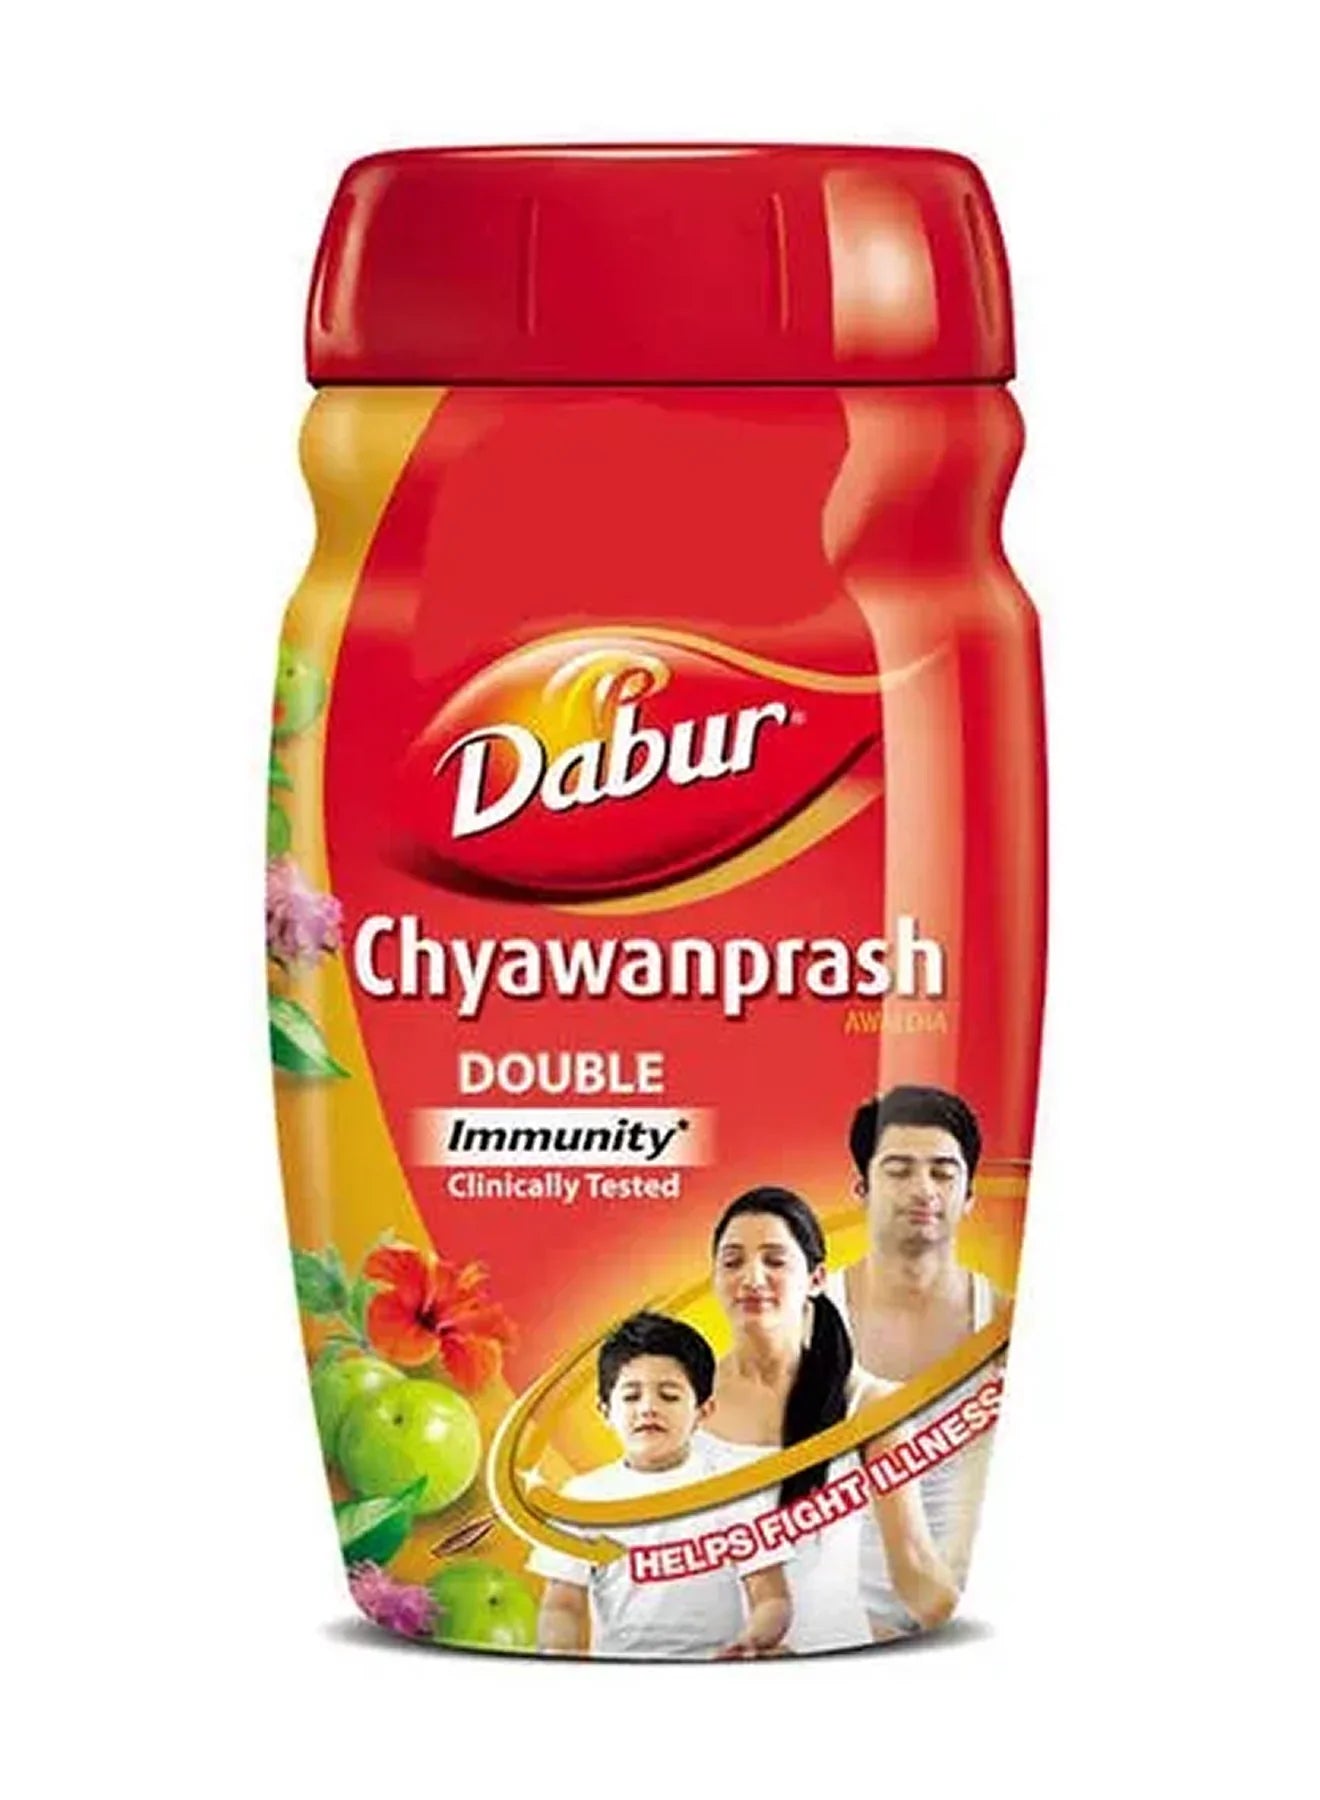 Dabur Chyawanprash 500g  Immunity Booster  Herbal  Natural